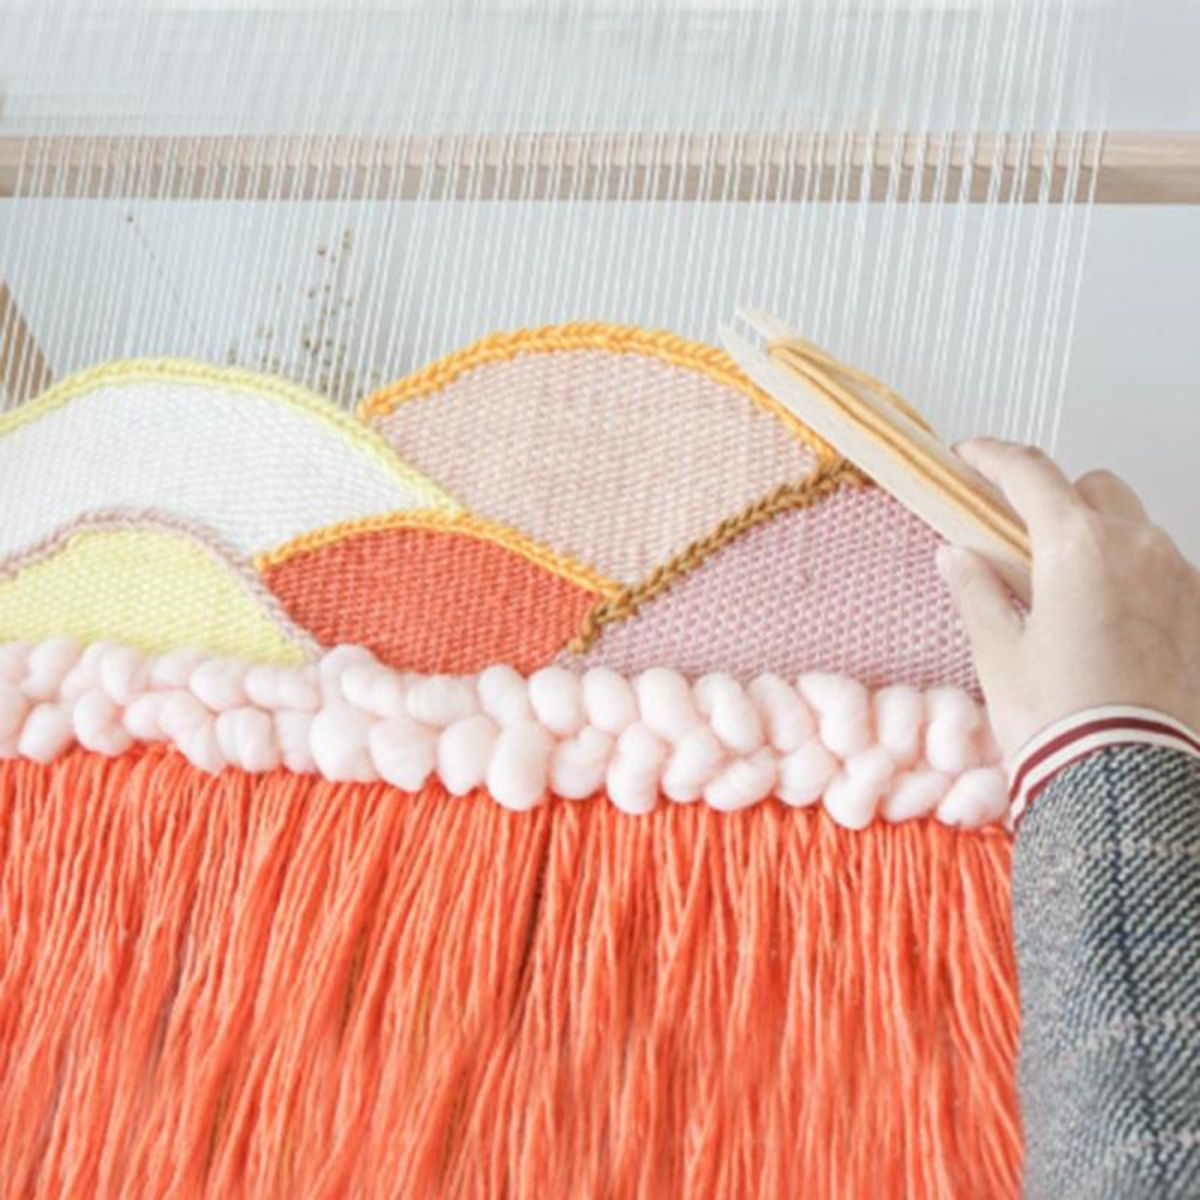 Wooden-Weaving-Loom-Tapestry-Knitting-Machine-Play-Toys-Kid-DIY-Craft-Kit-Gift-1632626